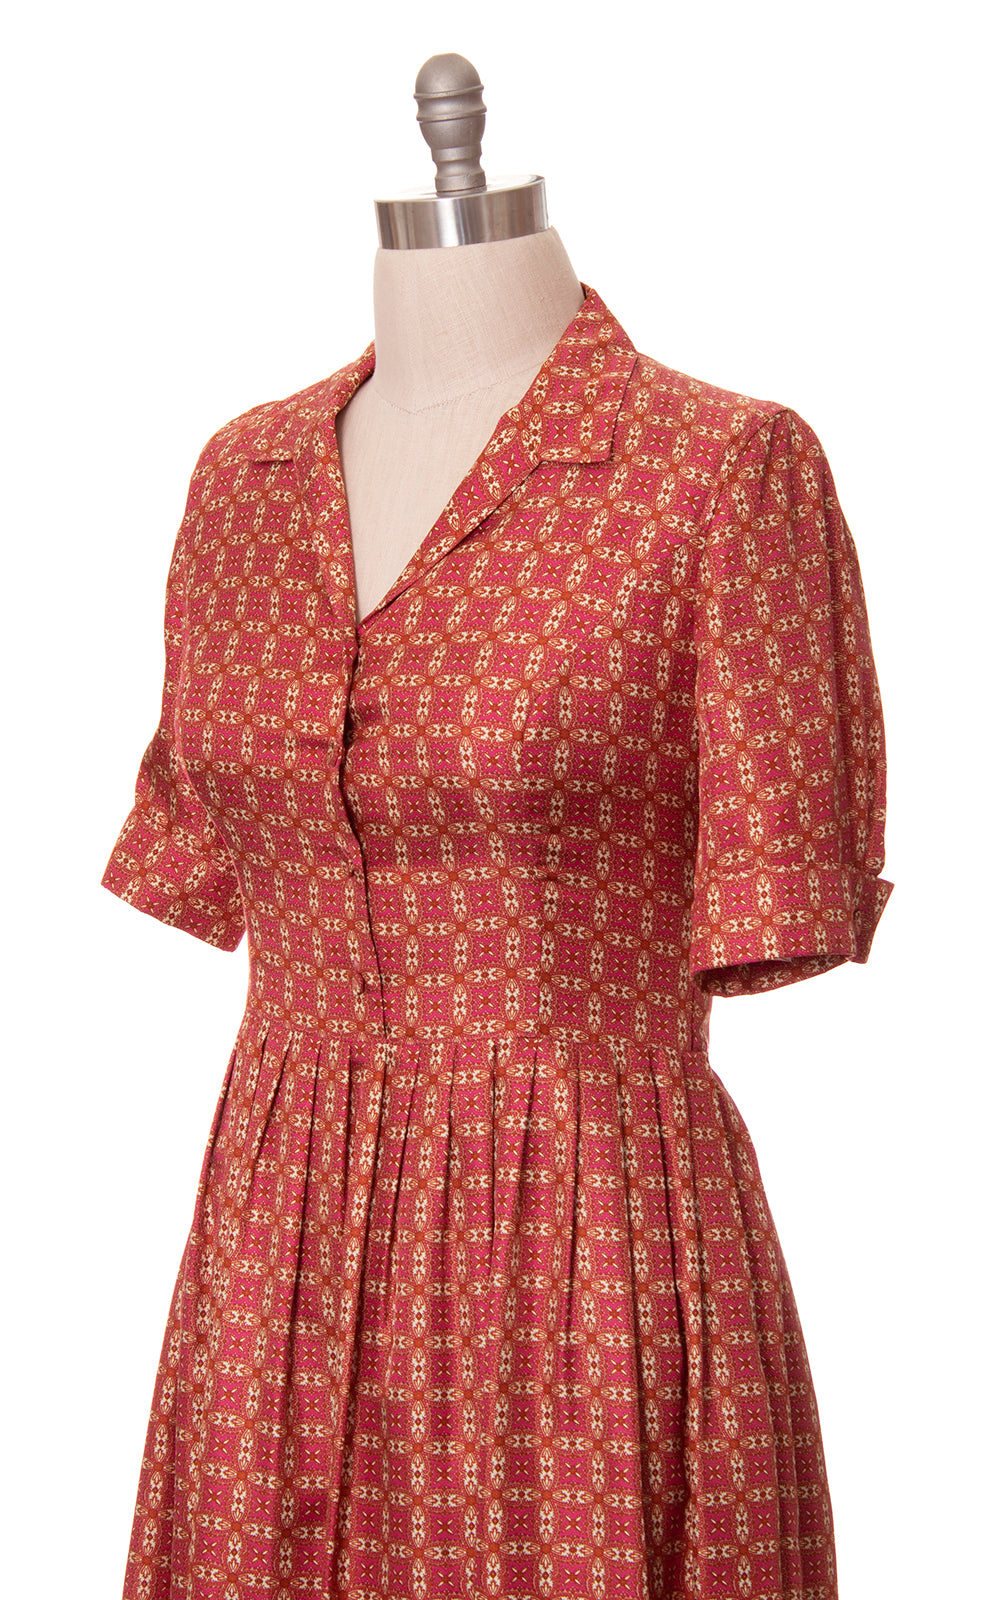 Modern 1950s Style ANN TAYLOR Silk Geometric Shirtwaist Dress | large